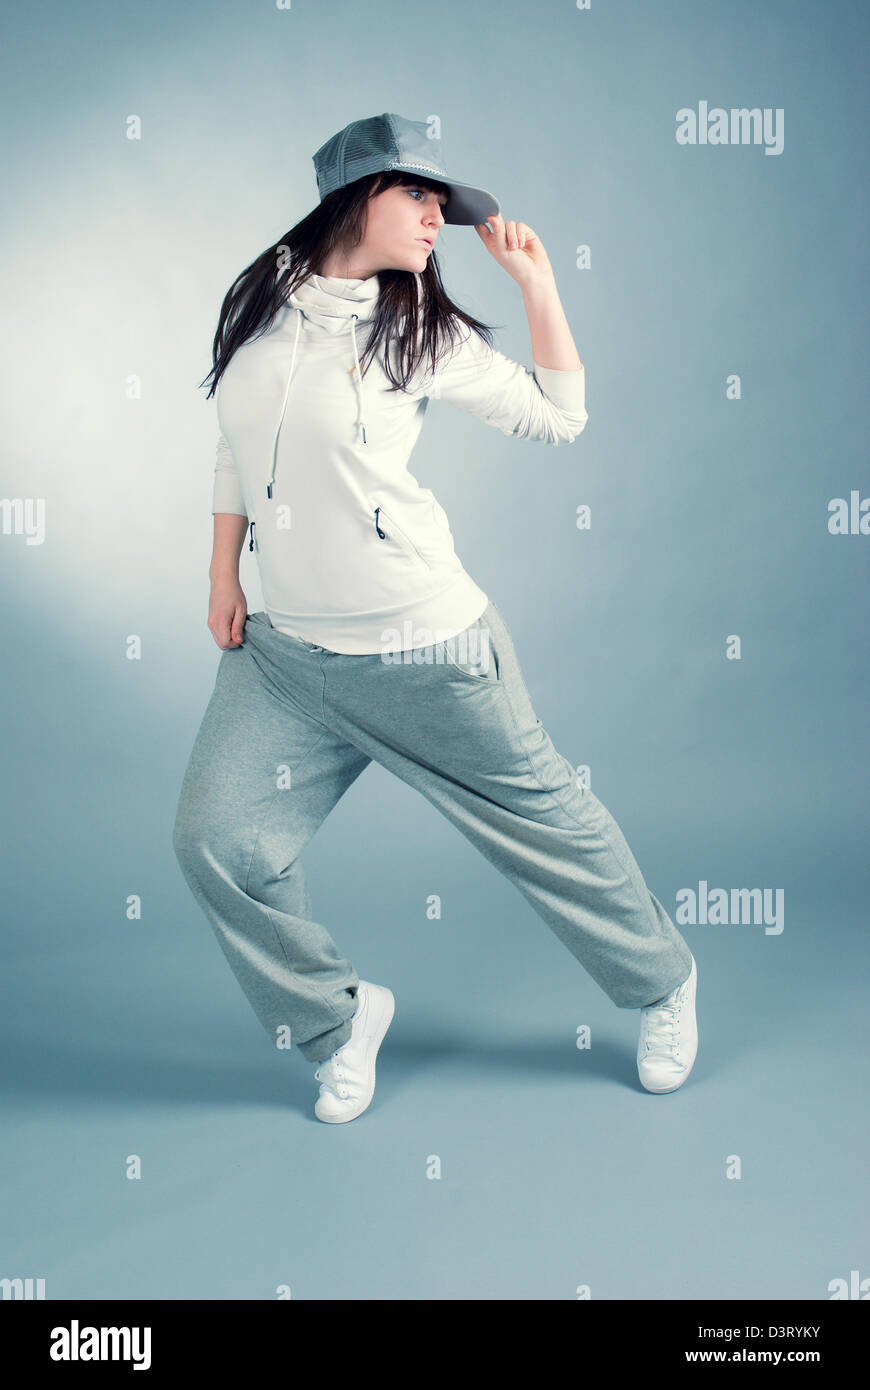 modern style dancer posing on gray background  Stock Photo